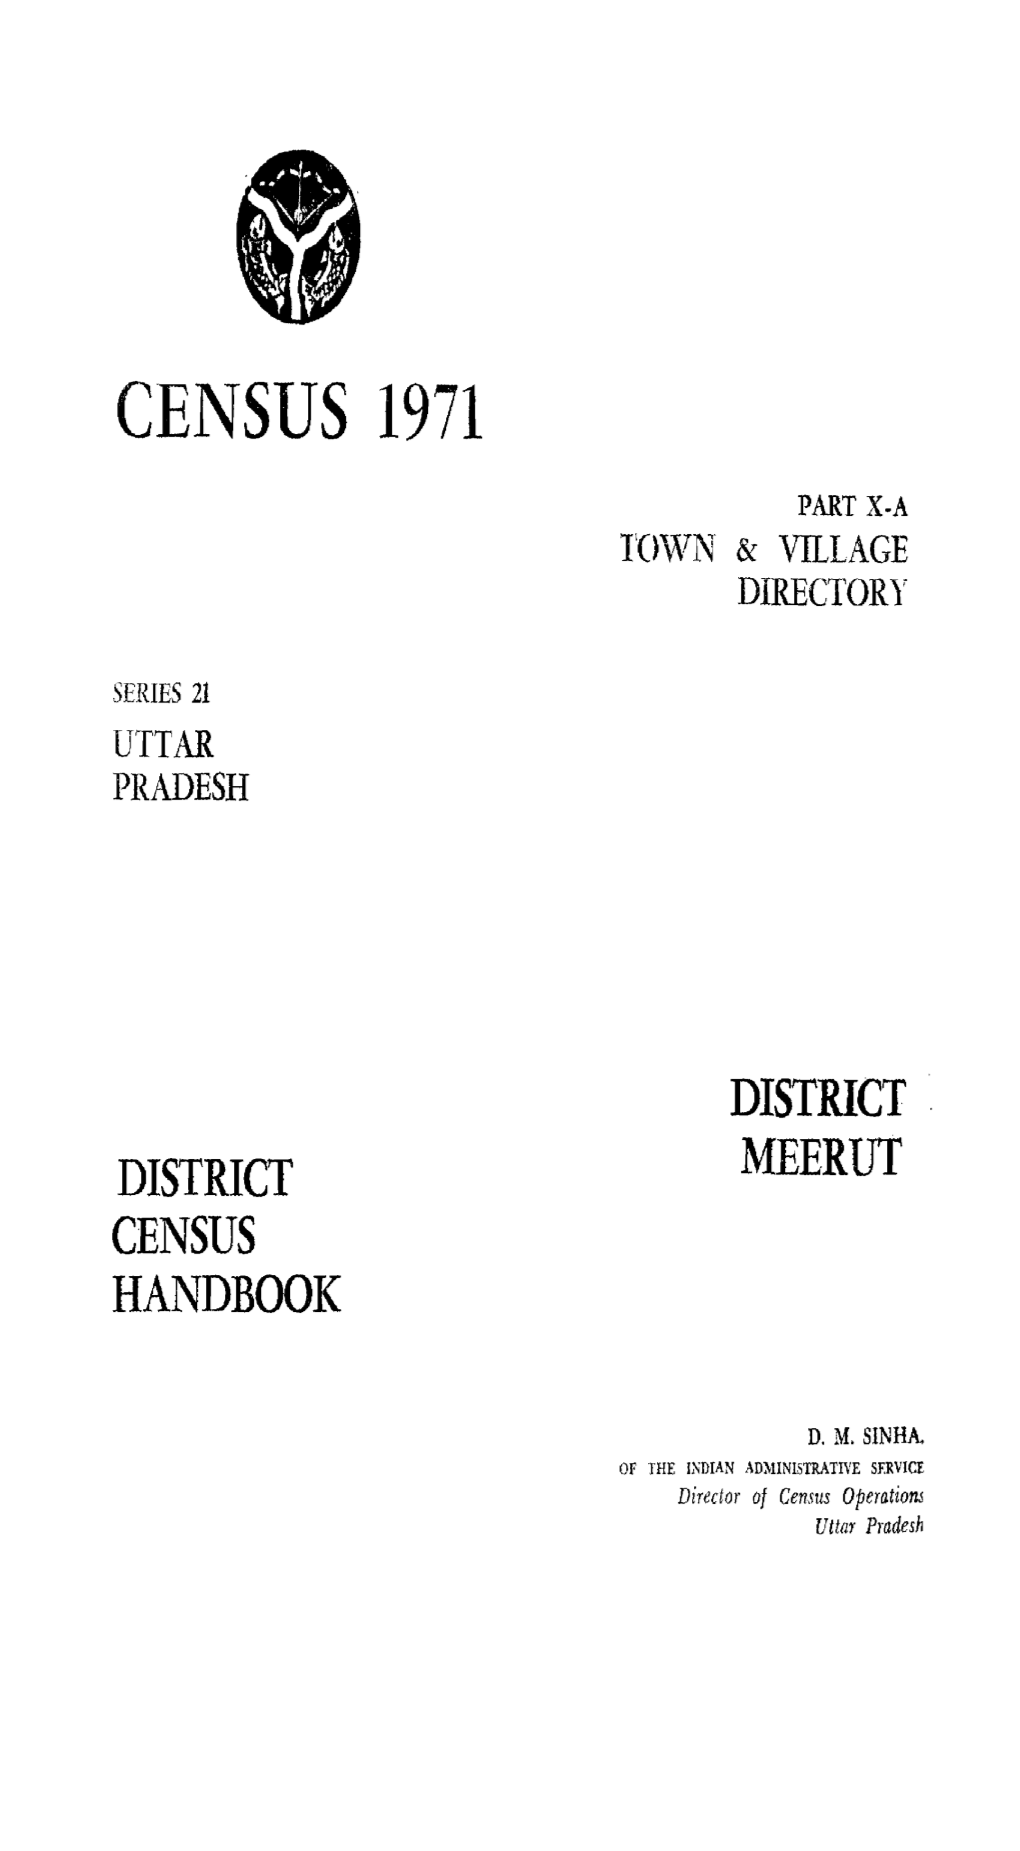 District Census Handbook, Meerut, Part X-A, Series-21, Uttar Pradesh